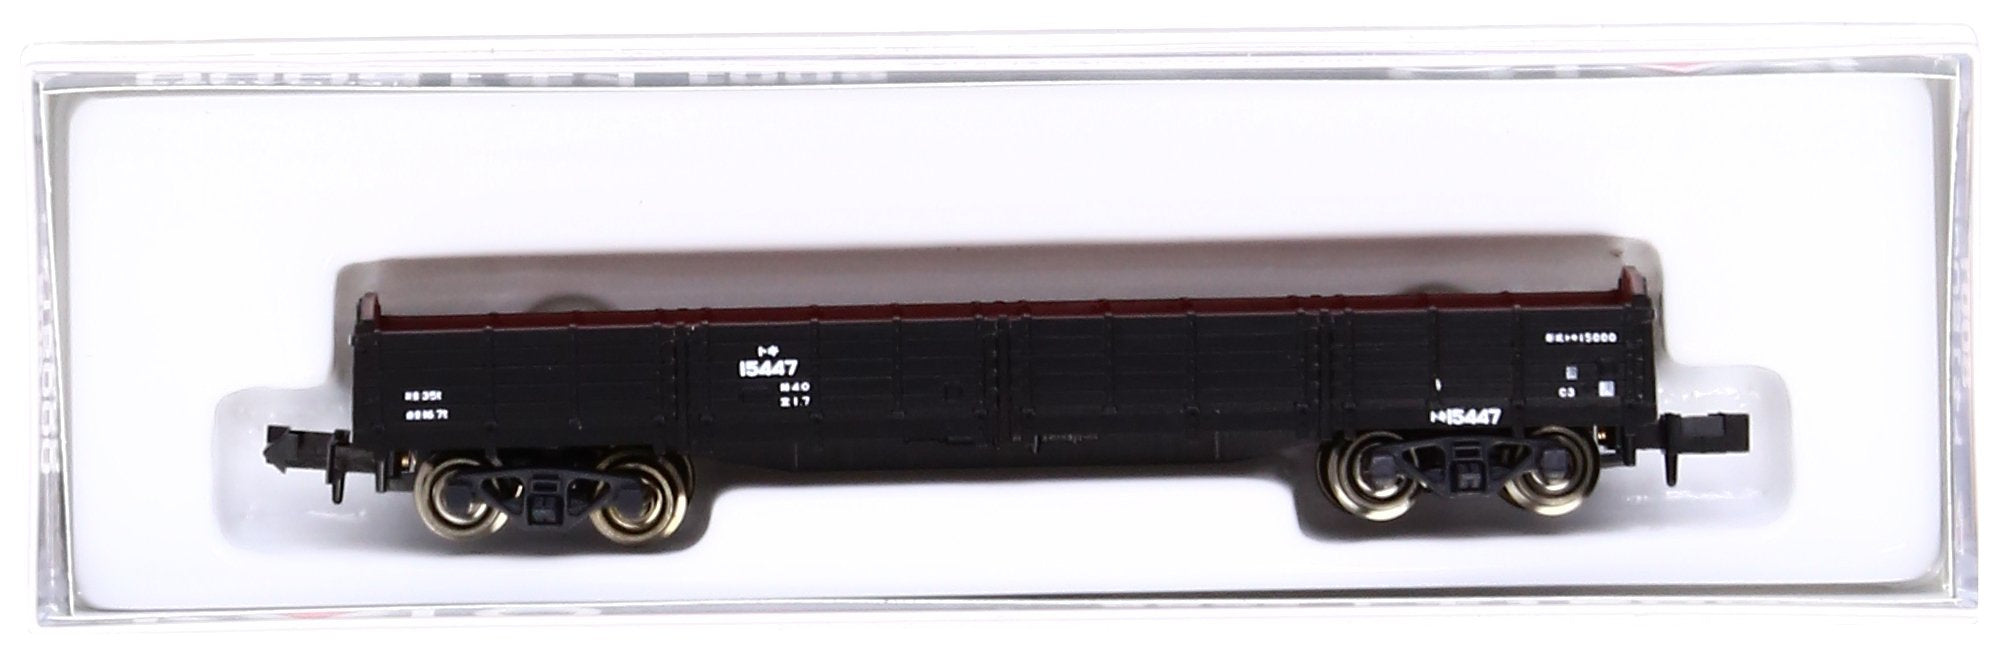 Kato N Gauge Toki15000 8001 Modell Güterwagen Eisenbahn Sammlerstück